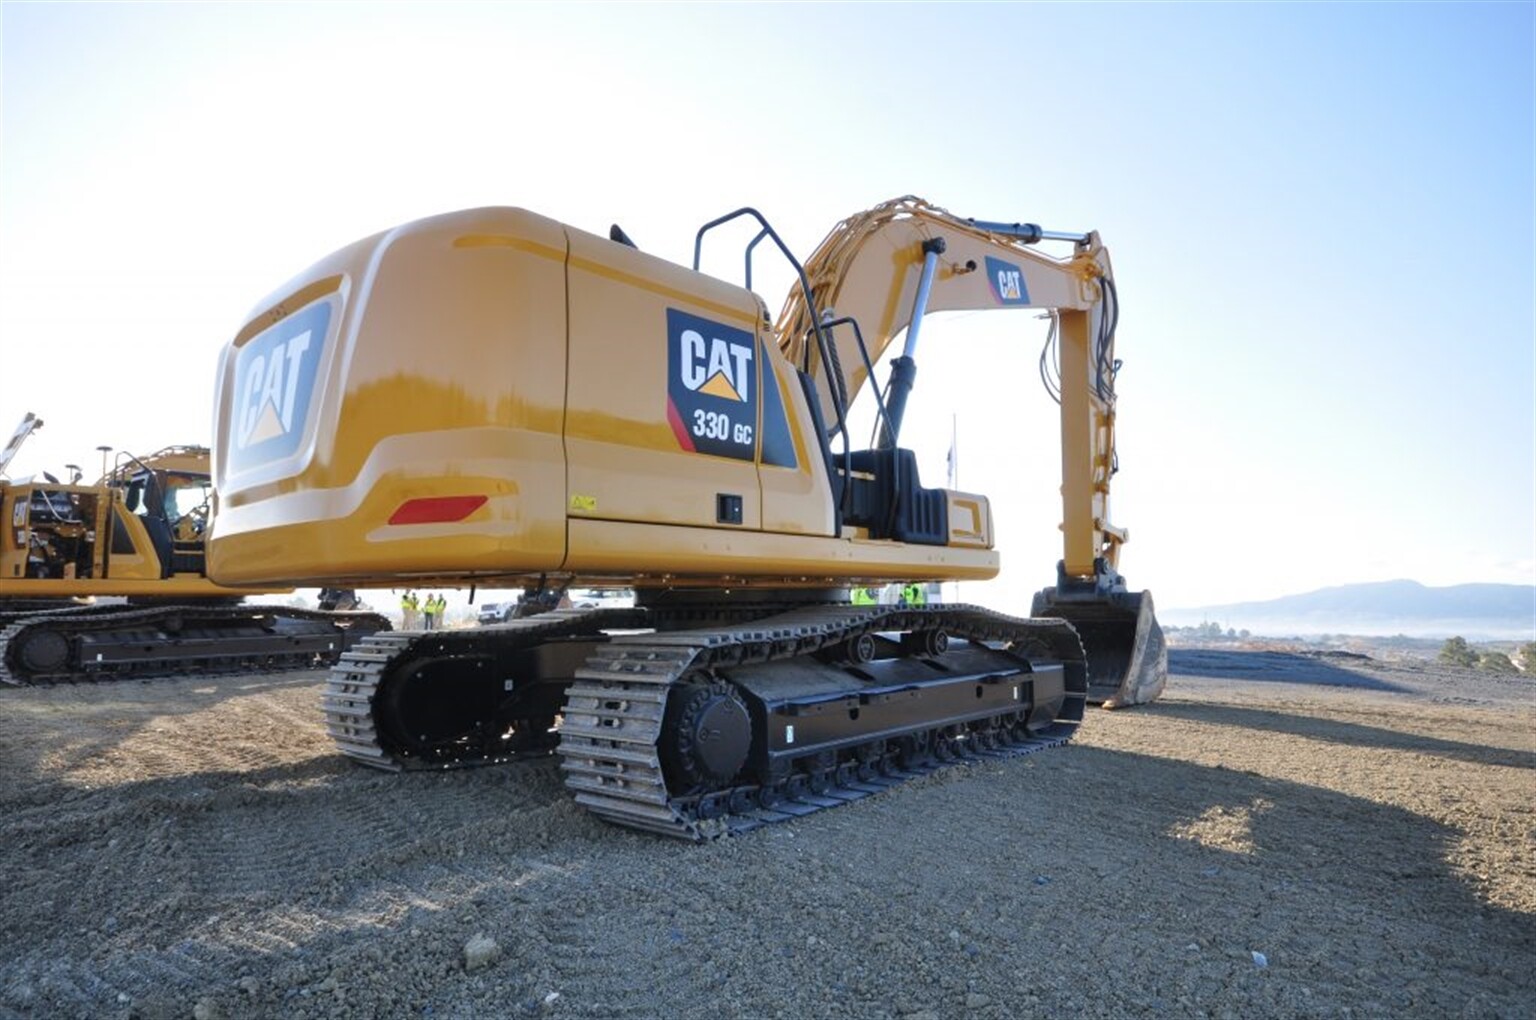 Caterpillar reveal the latest Next Generation excavator models.